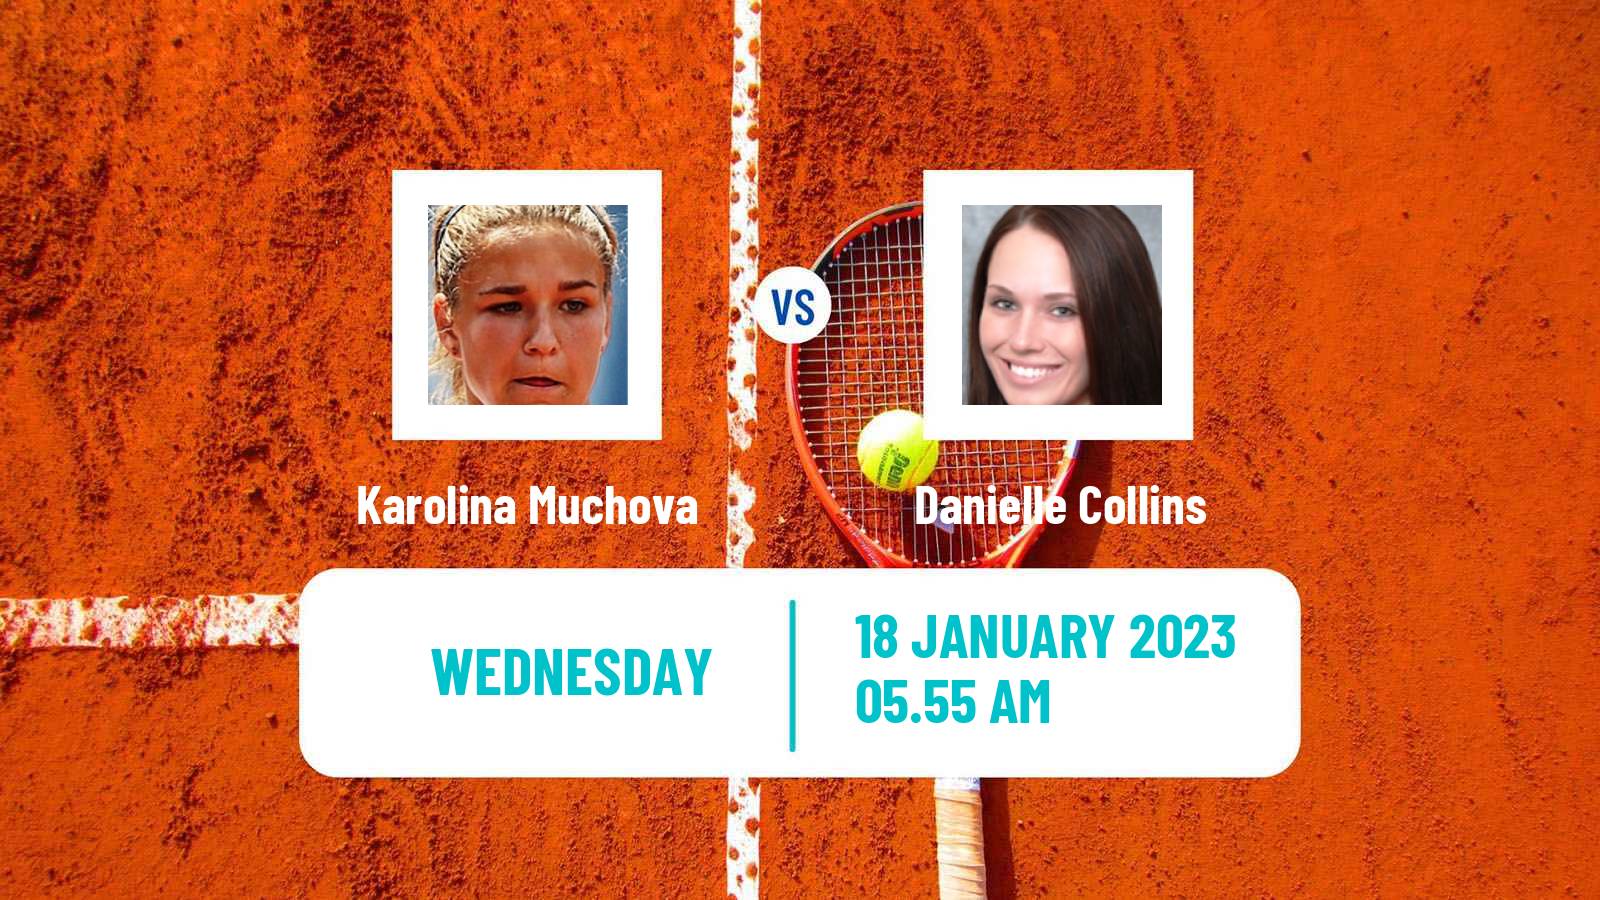 Tennis WTA Australian Open Karolina Muchova - Danielle Collins